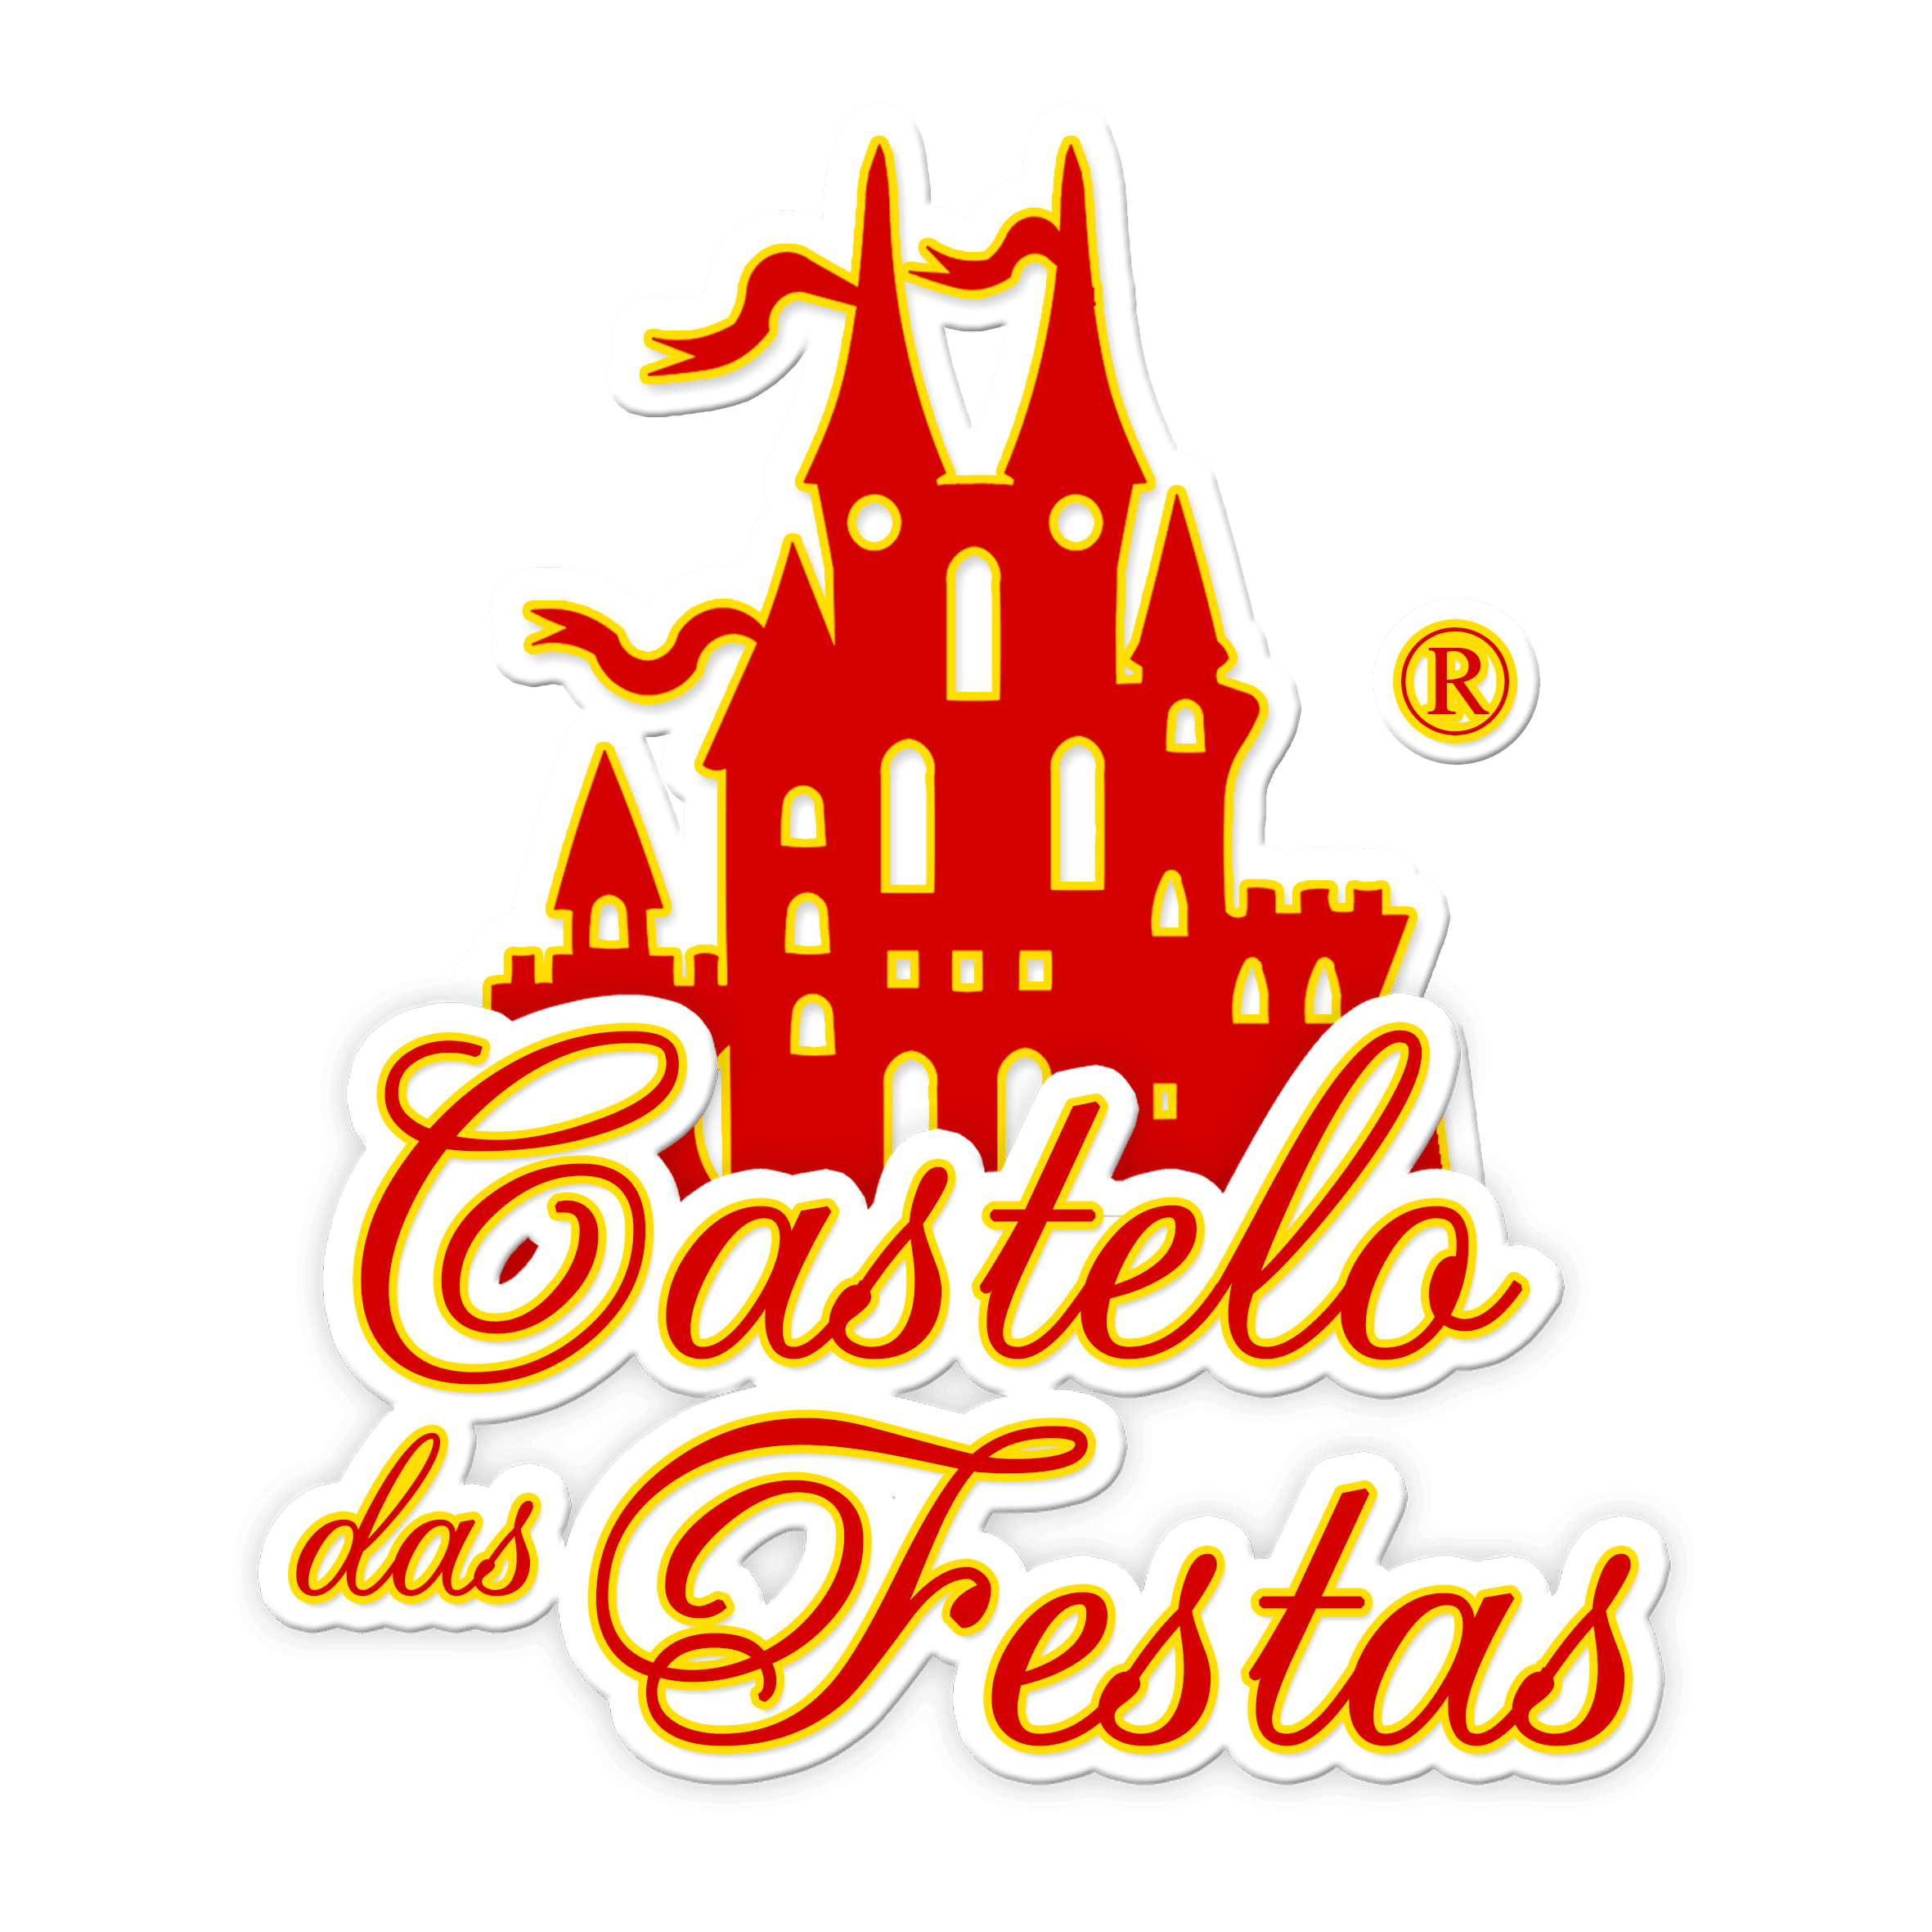 Castelo das Festas